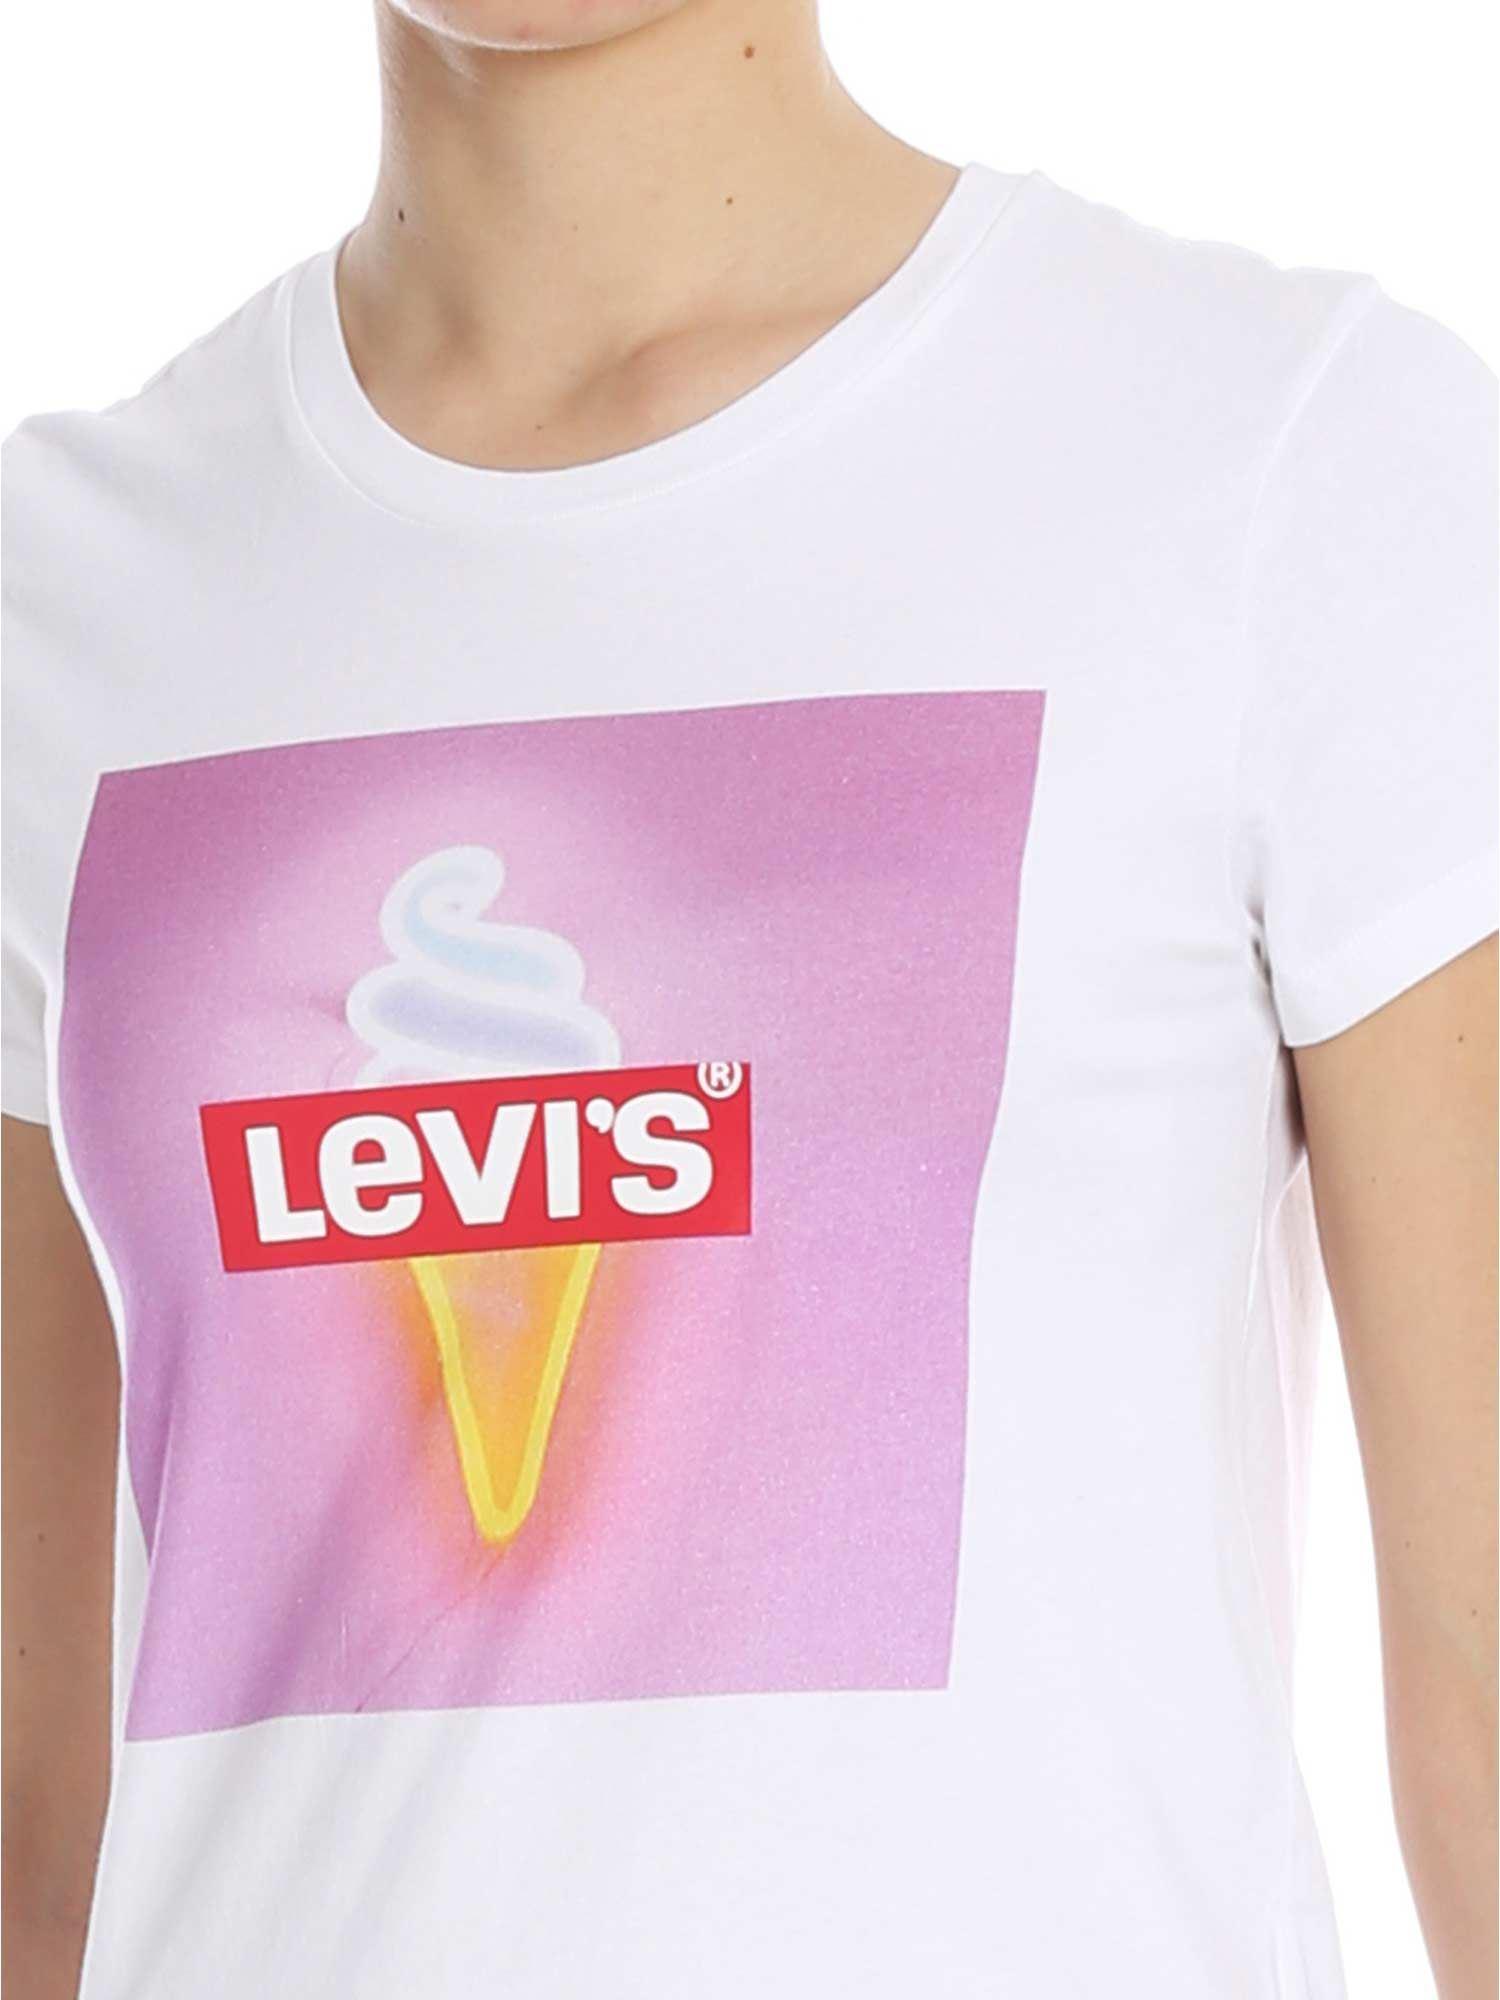 levis ice cream t shirt